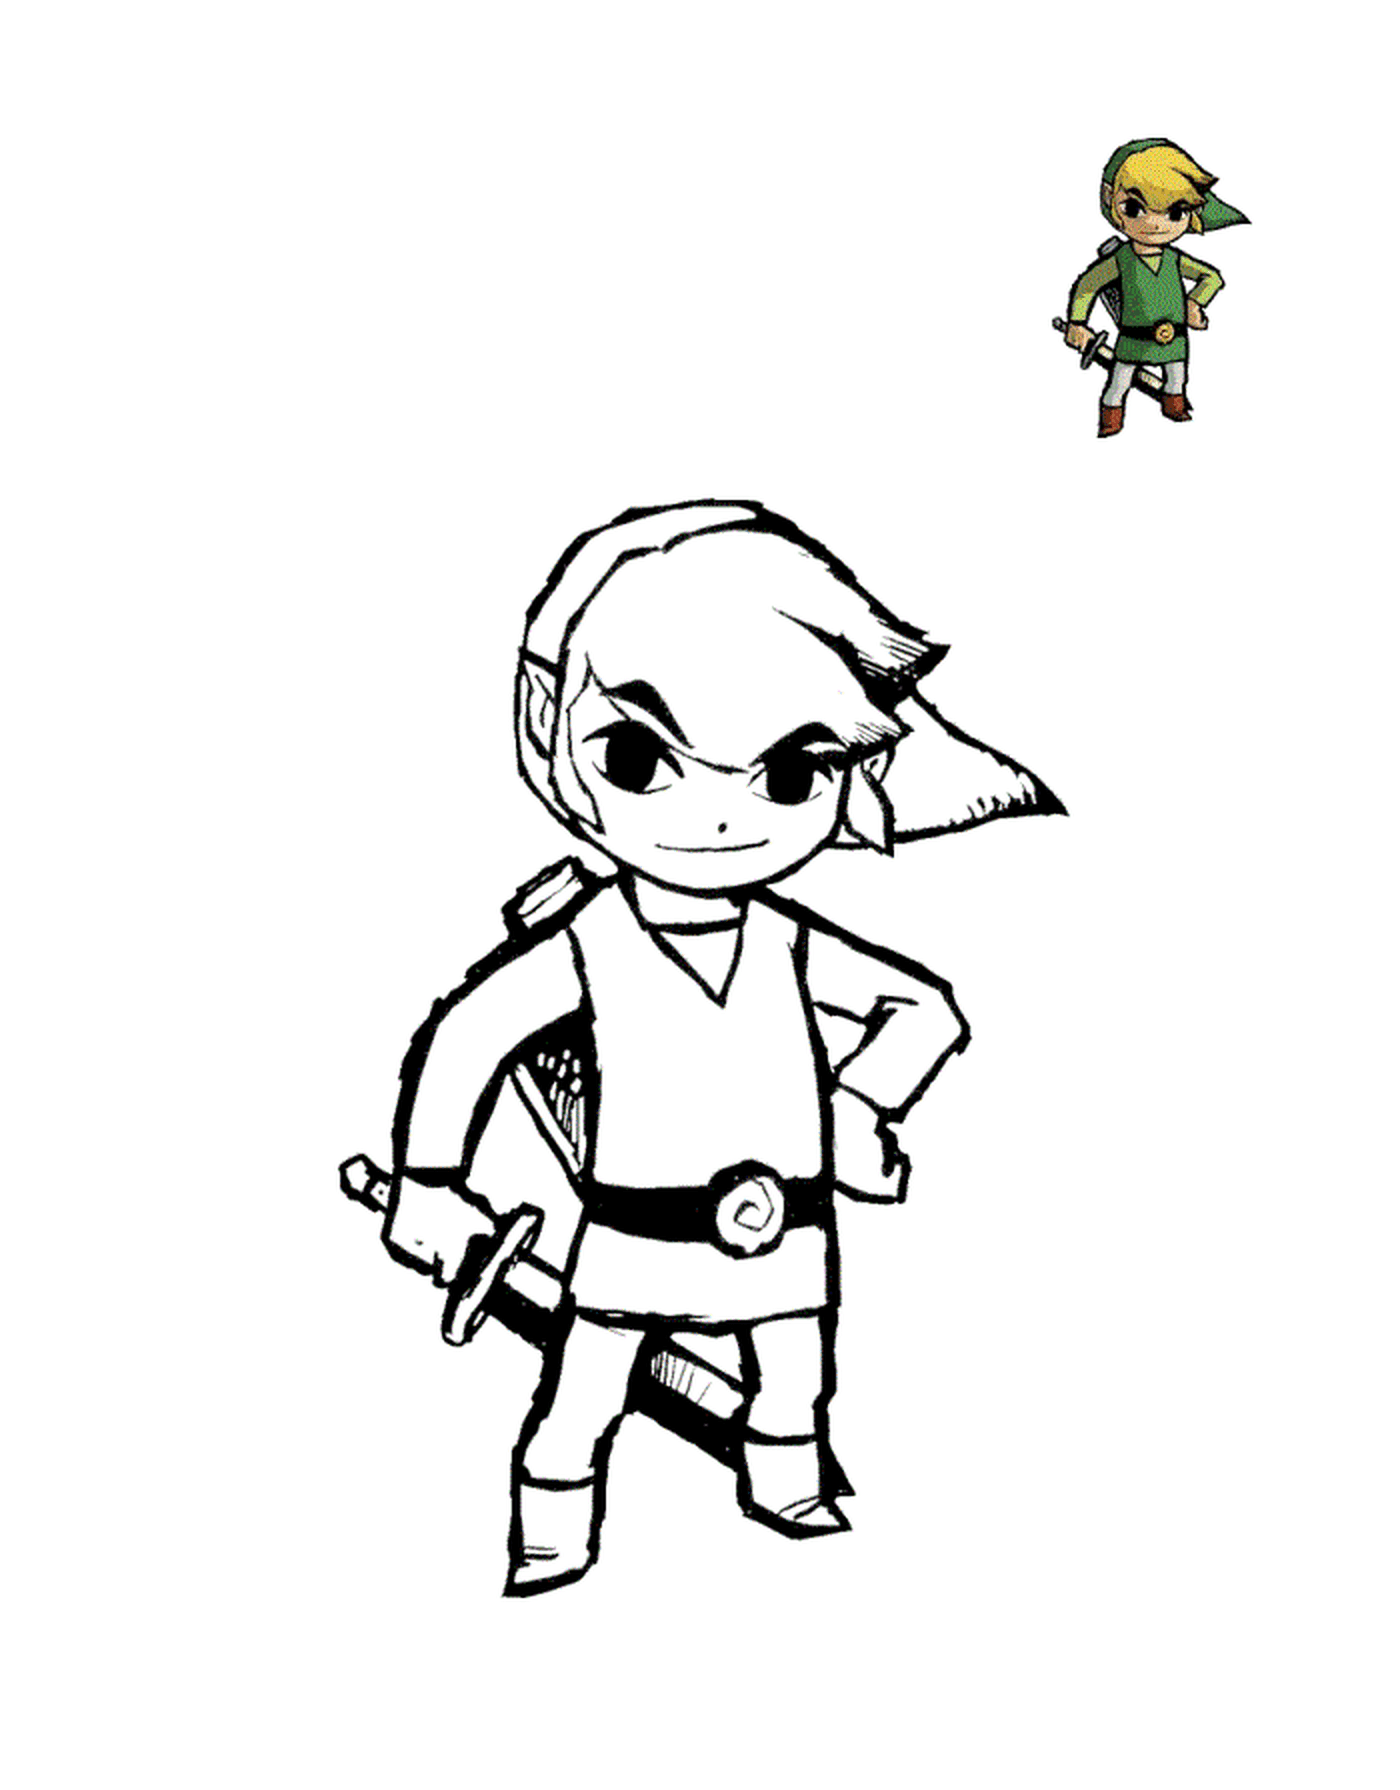  Link, der Held des Kokiri 